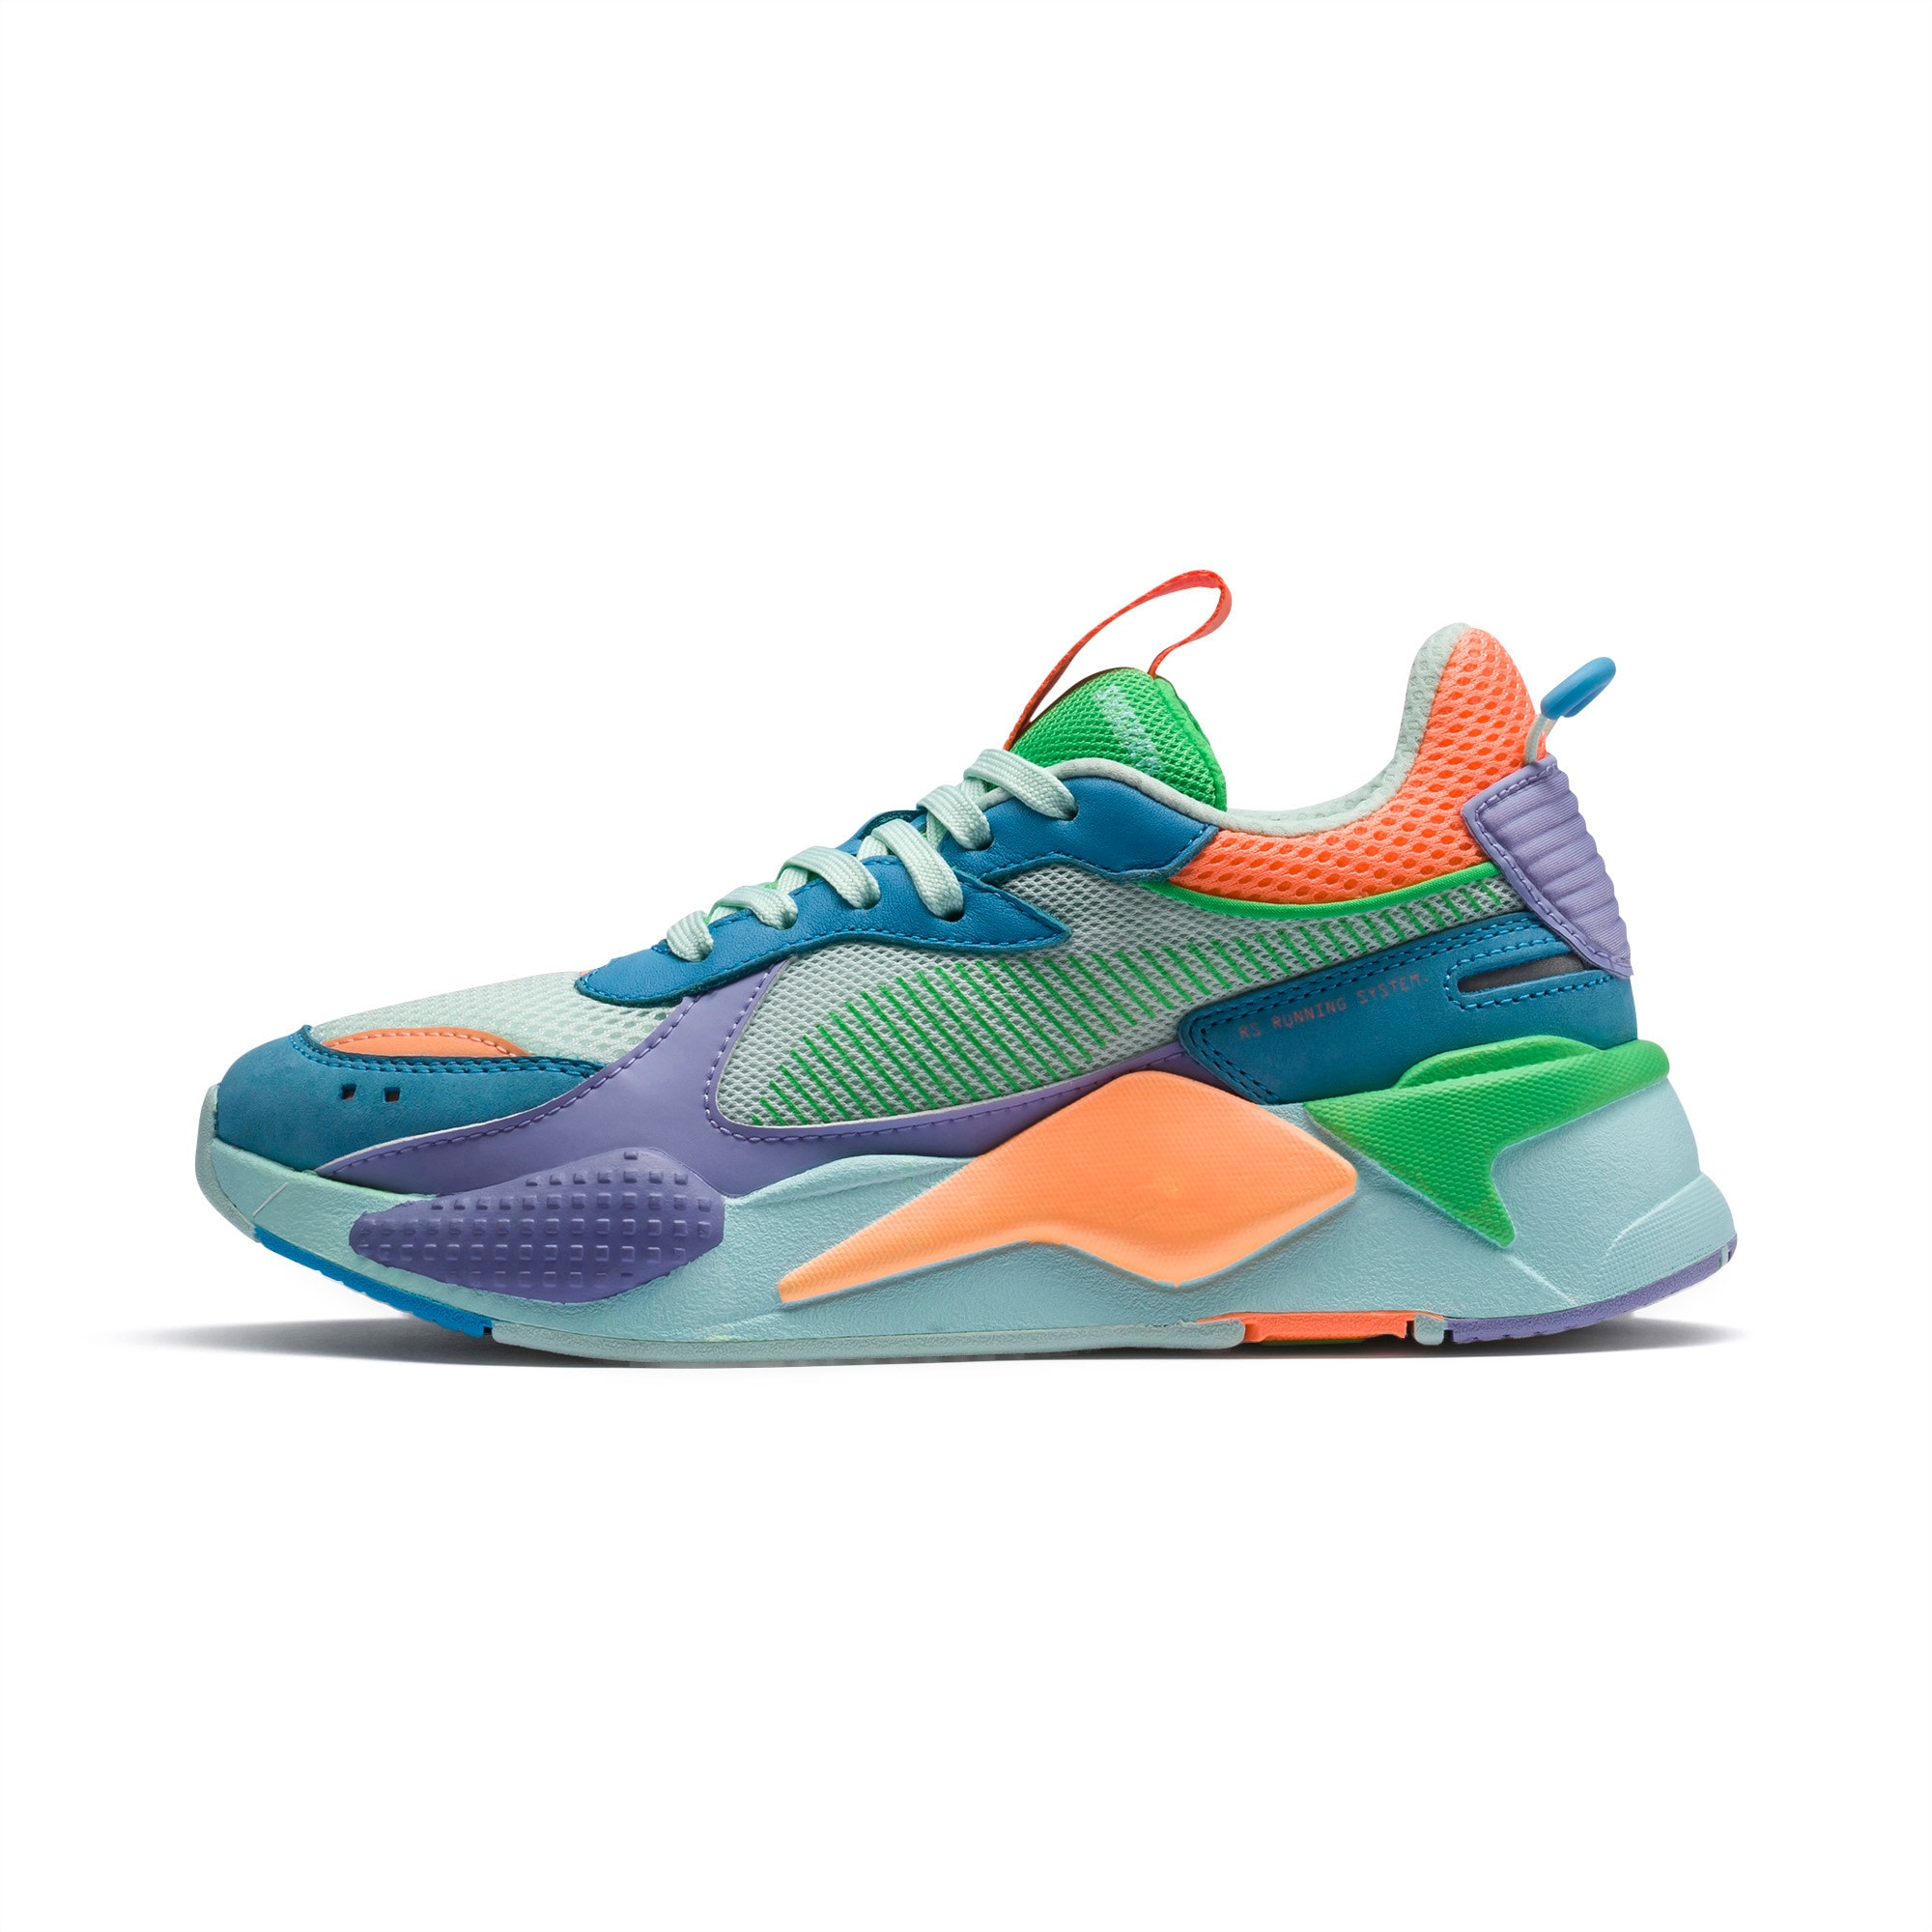 puma colourful sneakers